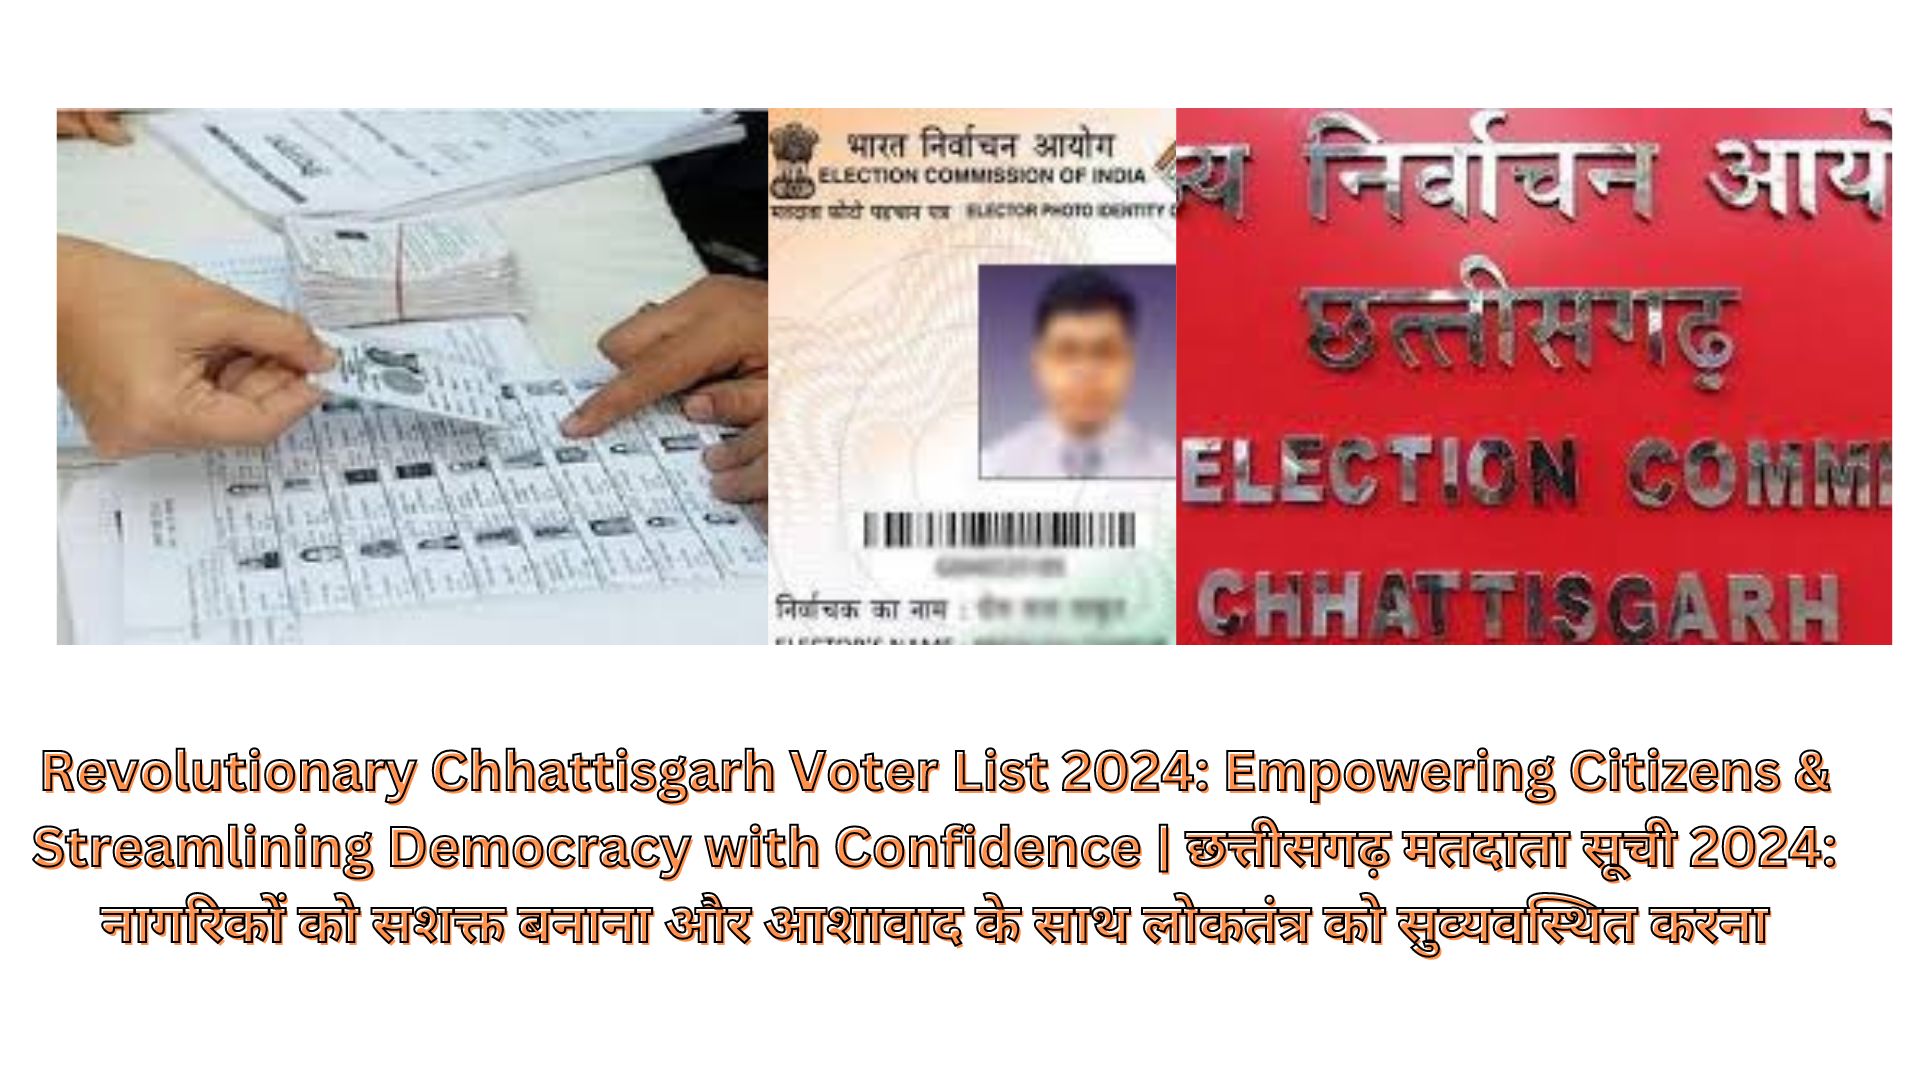 Revolutionary Chhattisgarh Voter List 2024: Empowering Citizens & Streamlining Democracy with Confidence | छत्तीसगढ़ मतदाता सूची 2024: नागरिकों को सशक्त बनाना और आशावाद के साथ लोकतंत्र को सुव्यवस्थित करना